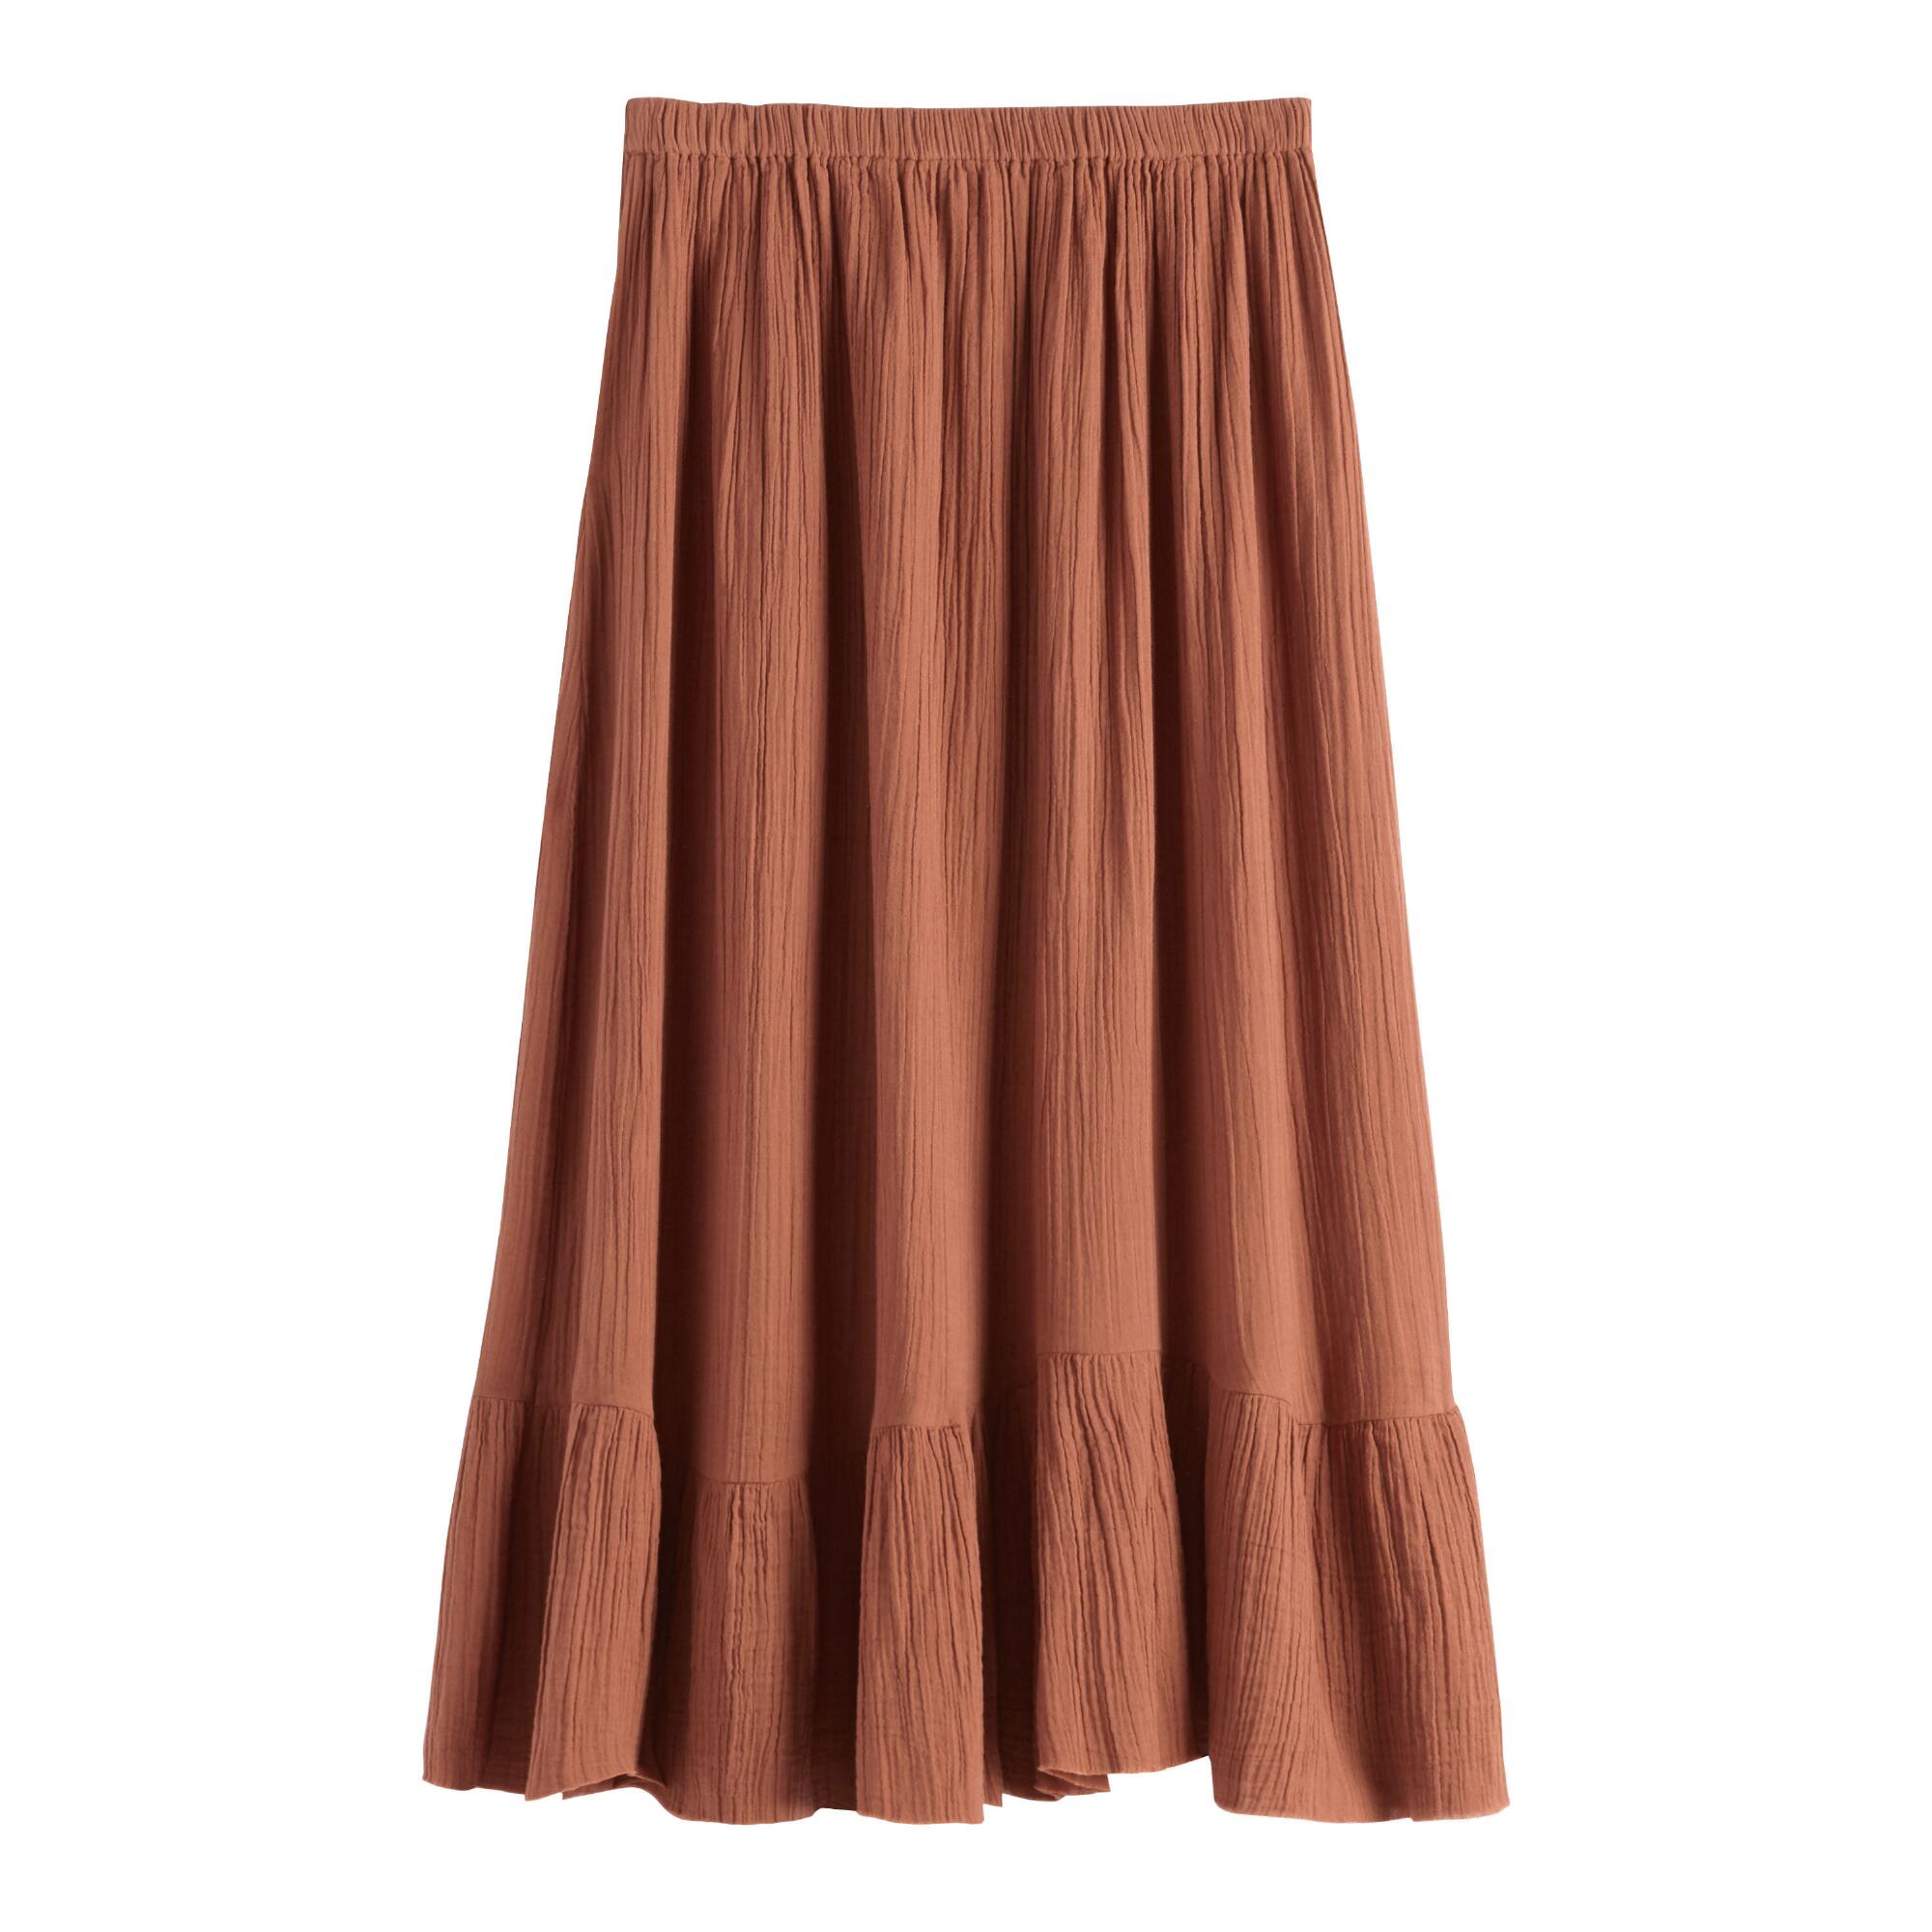 Rust Textured Ruffle Convertible Skirt Dress: Orange - Large by World Market